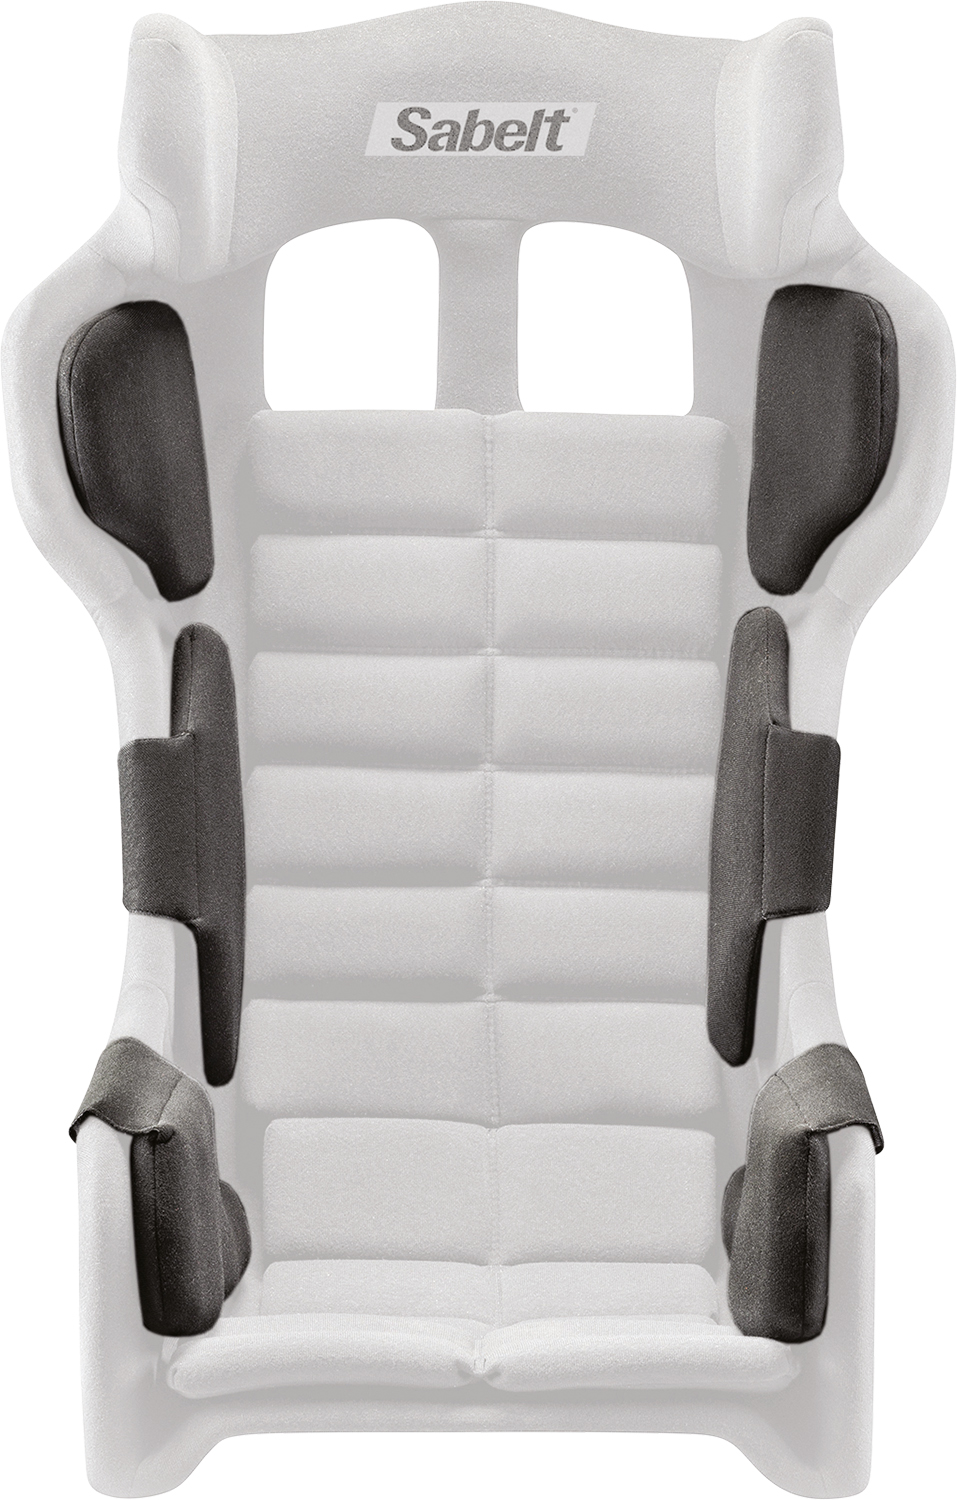 Seat Rückenpolster Stoff für SML010 Small Fahrersitz, 61,88 €